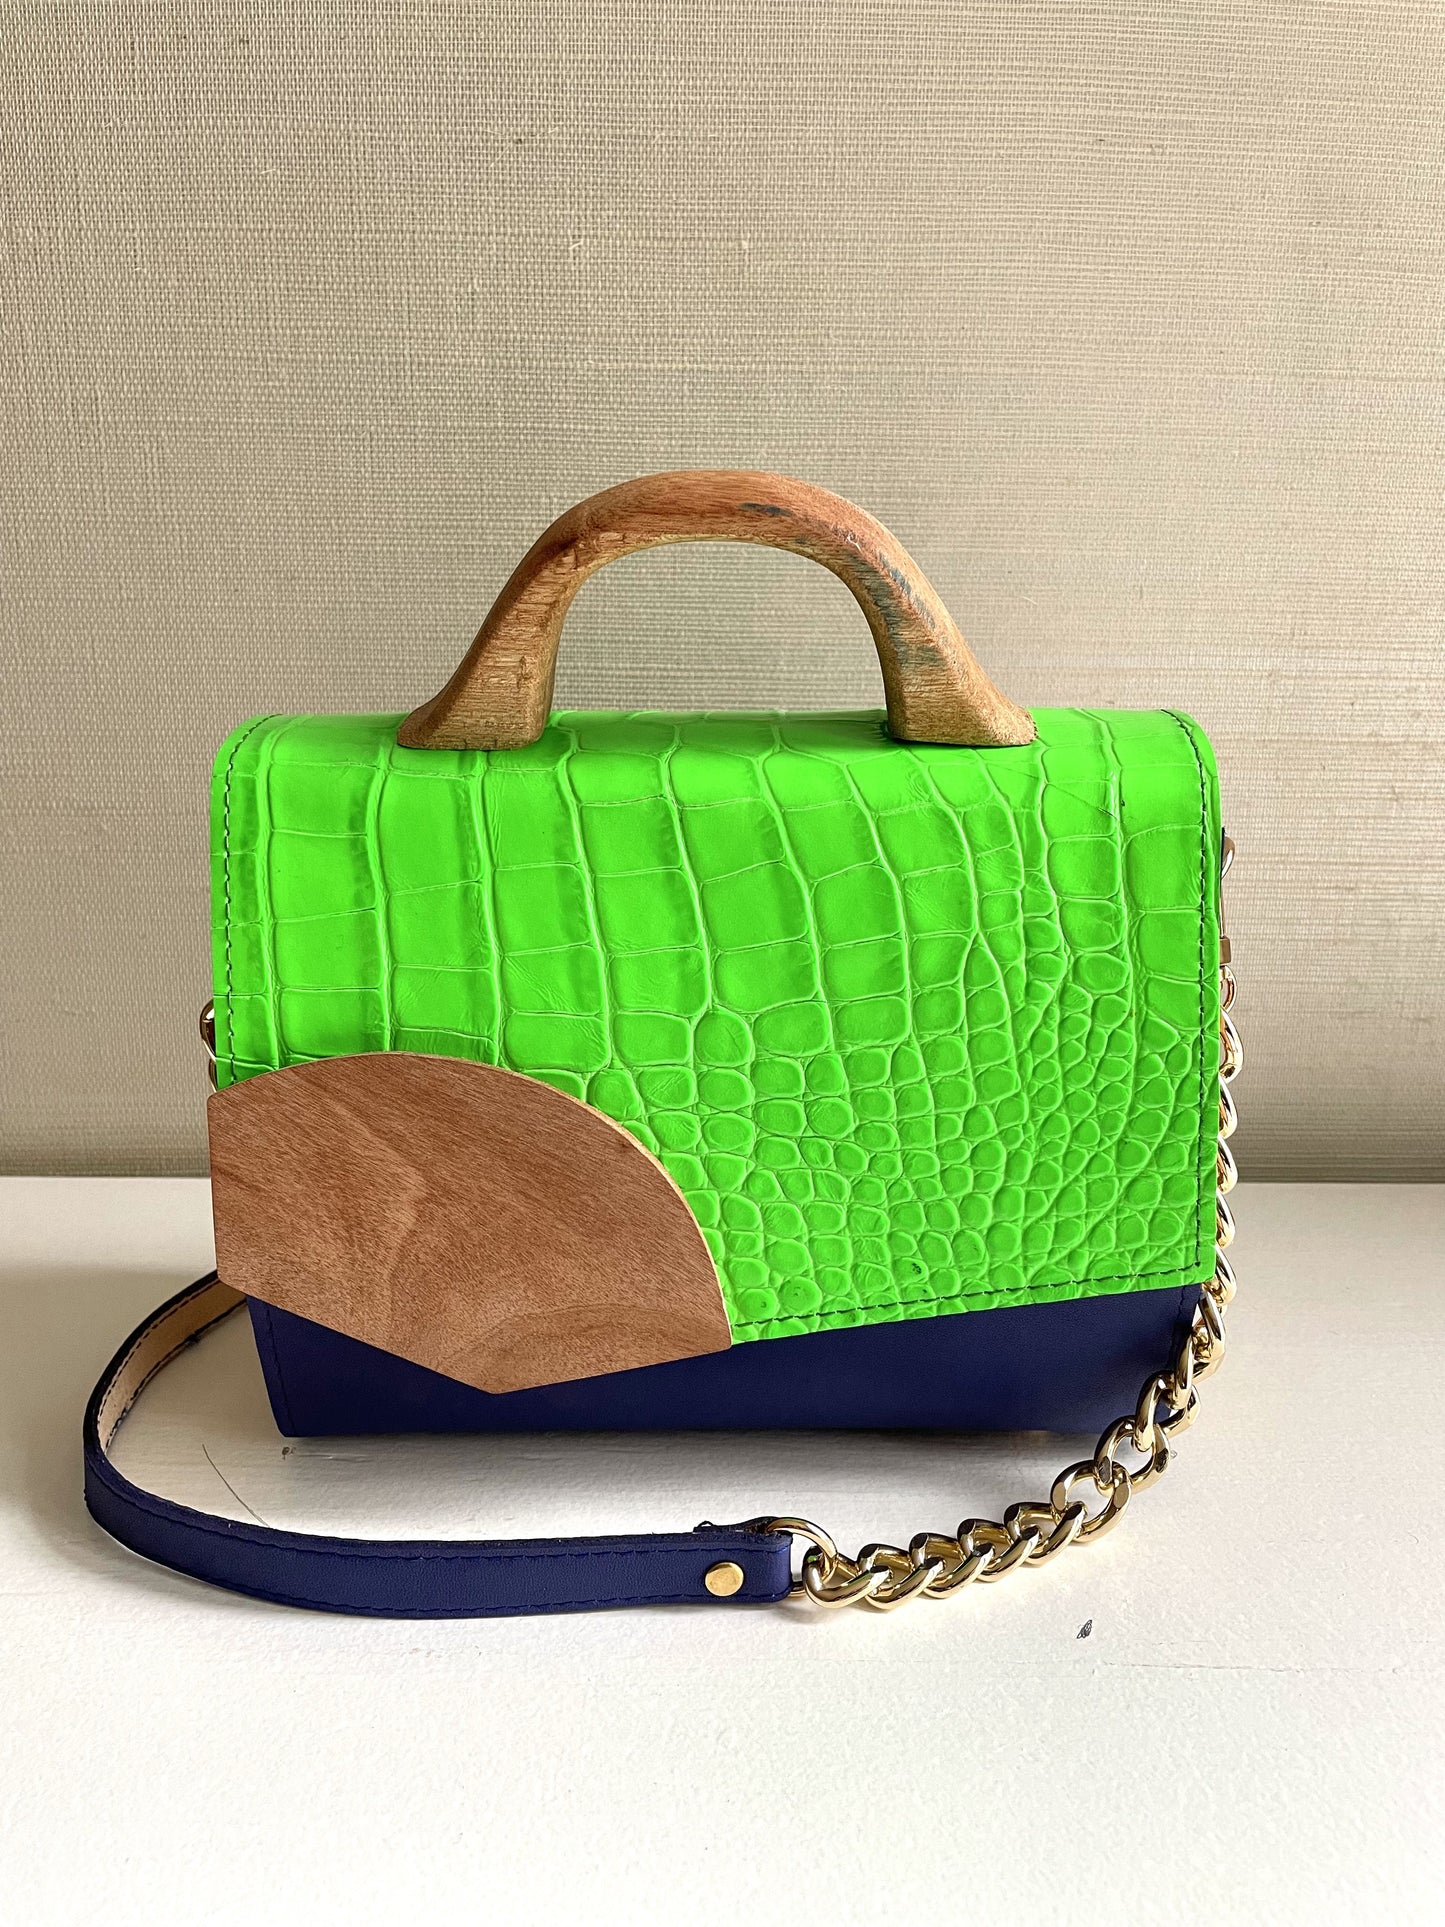 Neon Green Crocodile and Navy Handbag